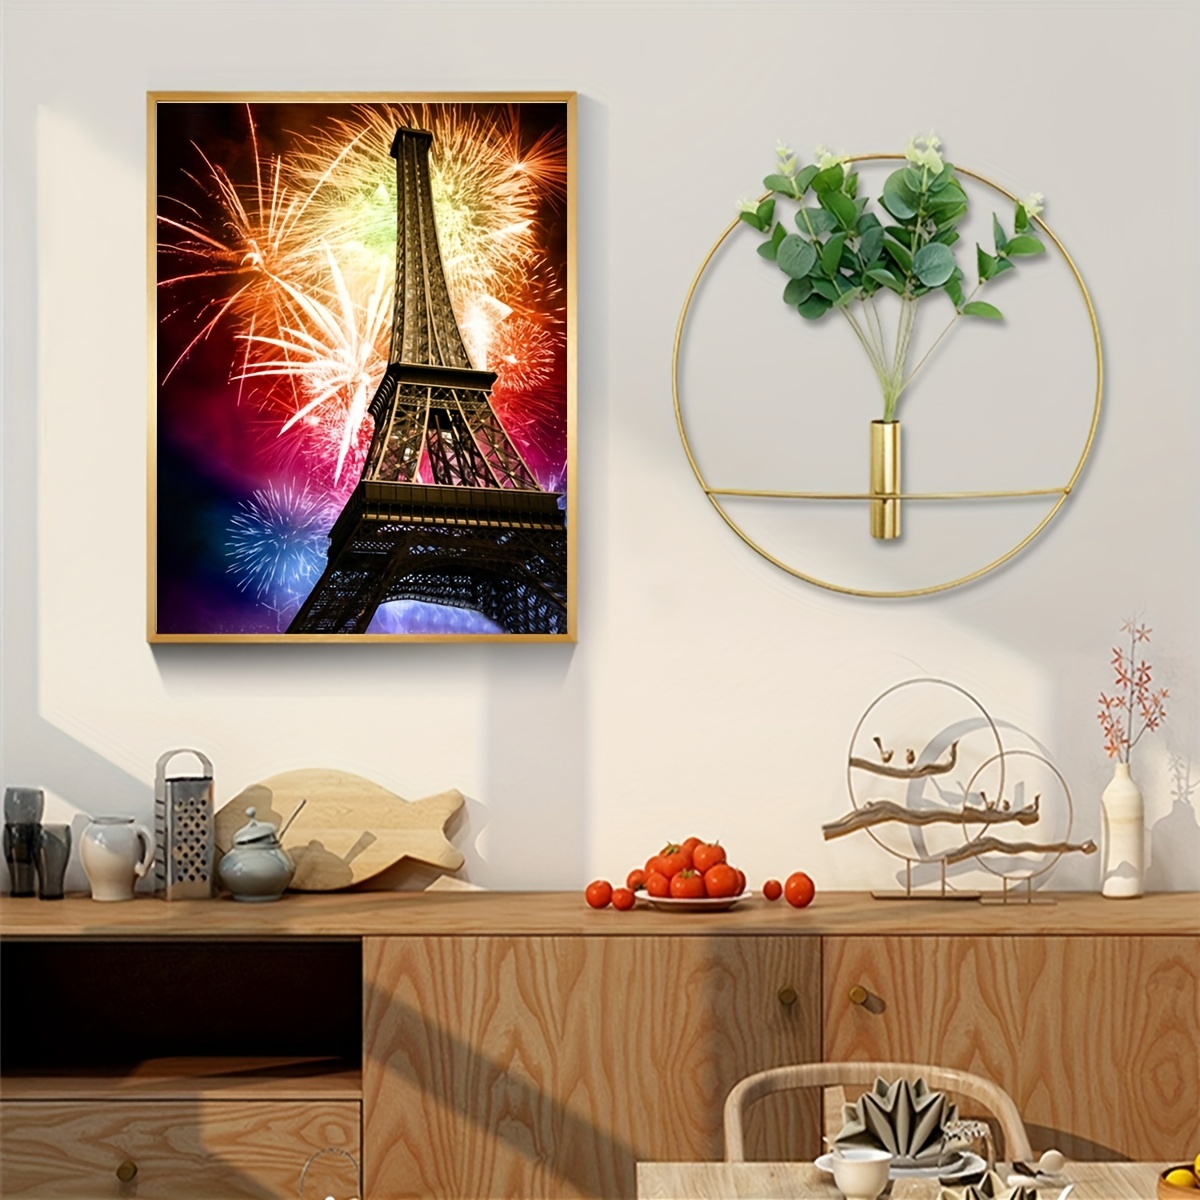 Torre Eiffel Diy 5d Kits de pintura de diamantes para adultos